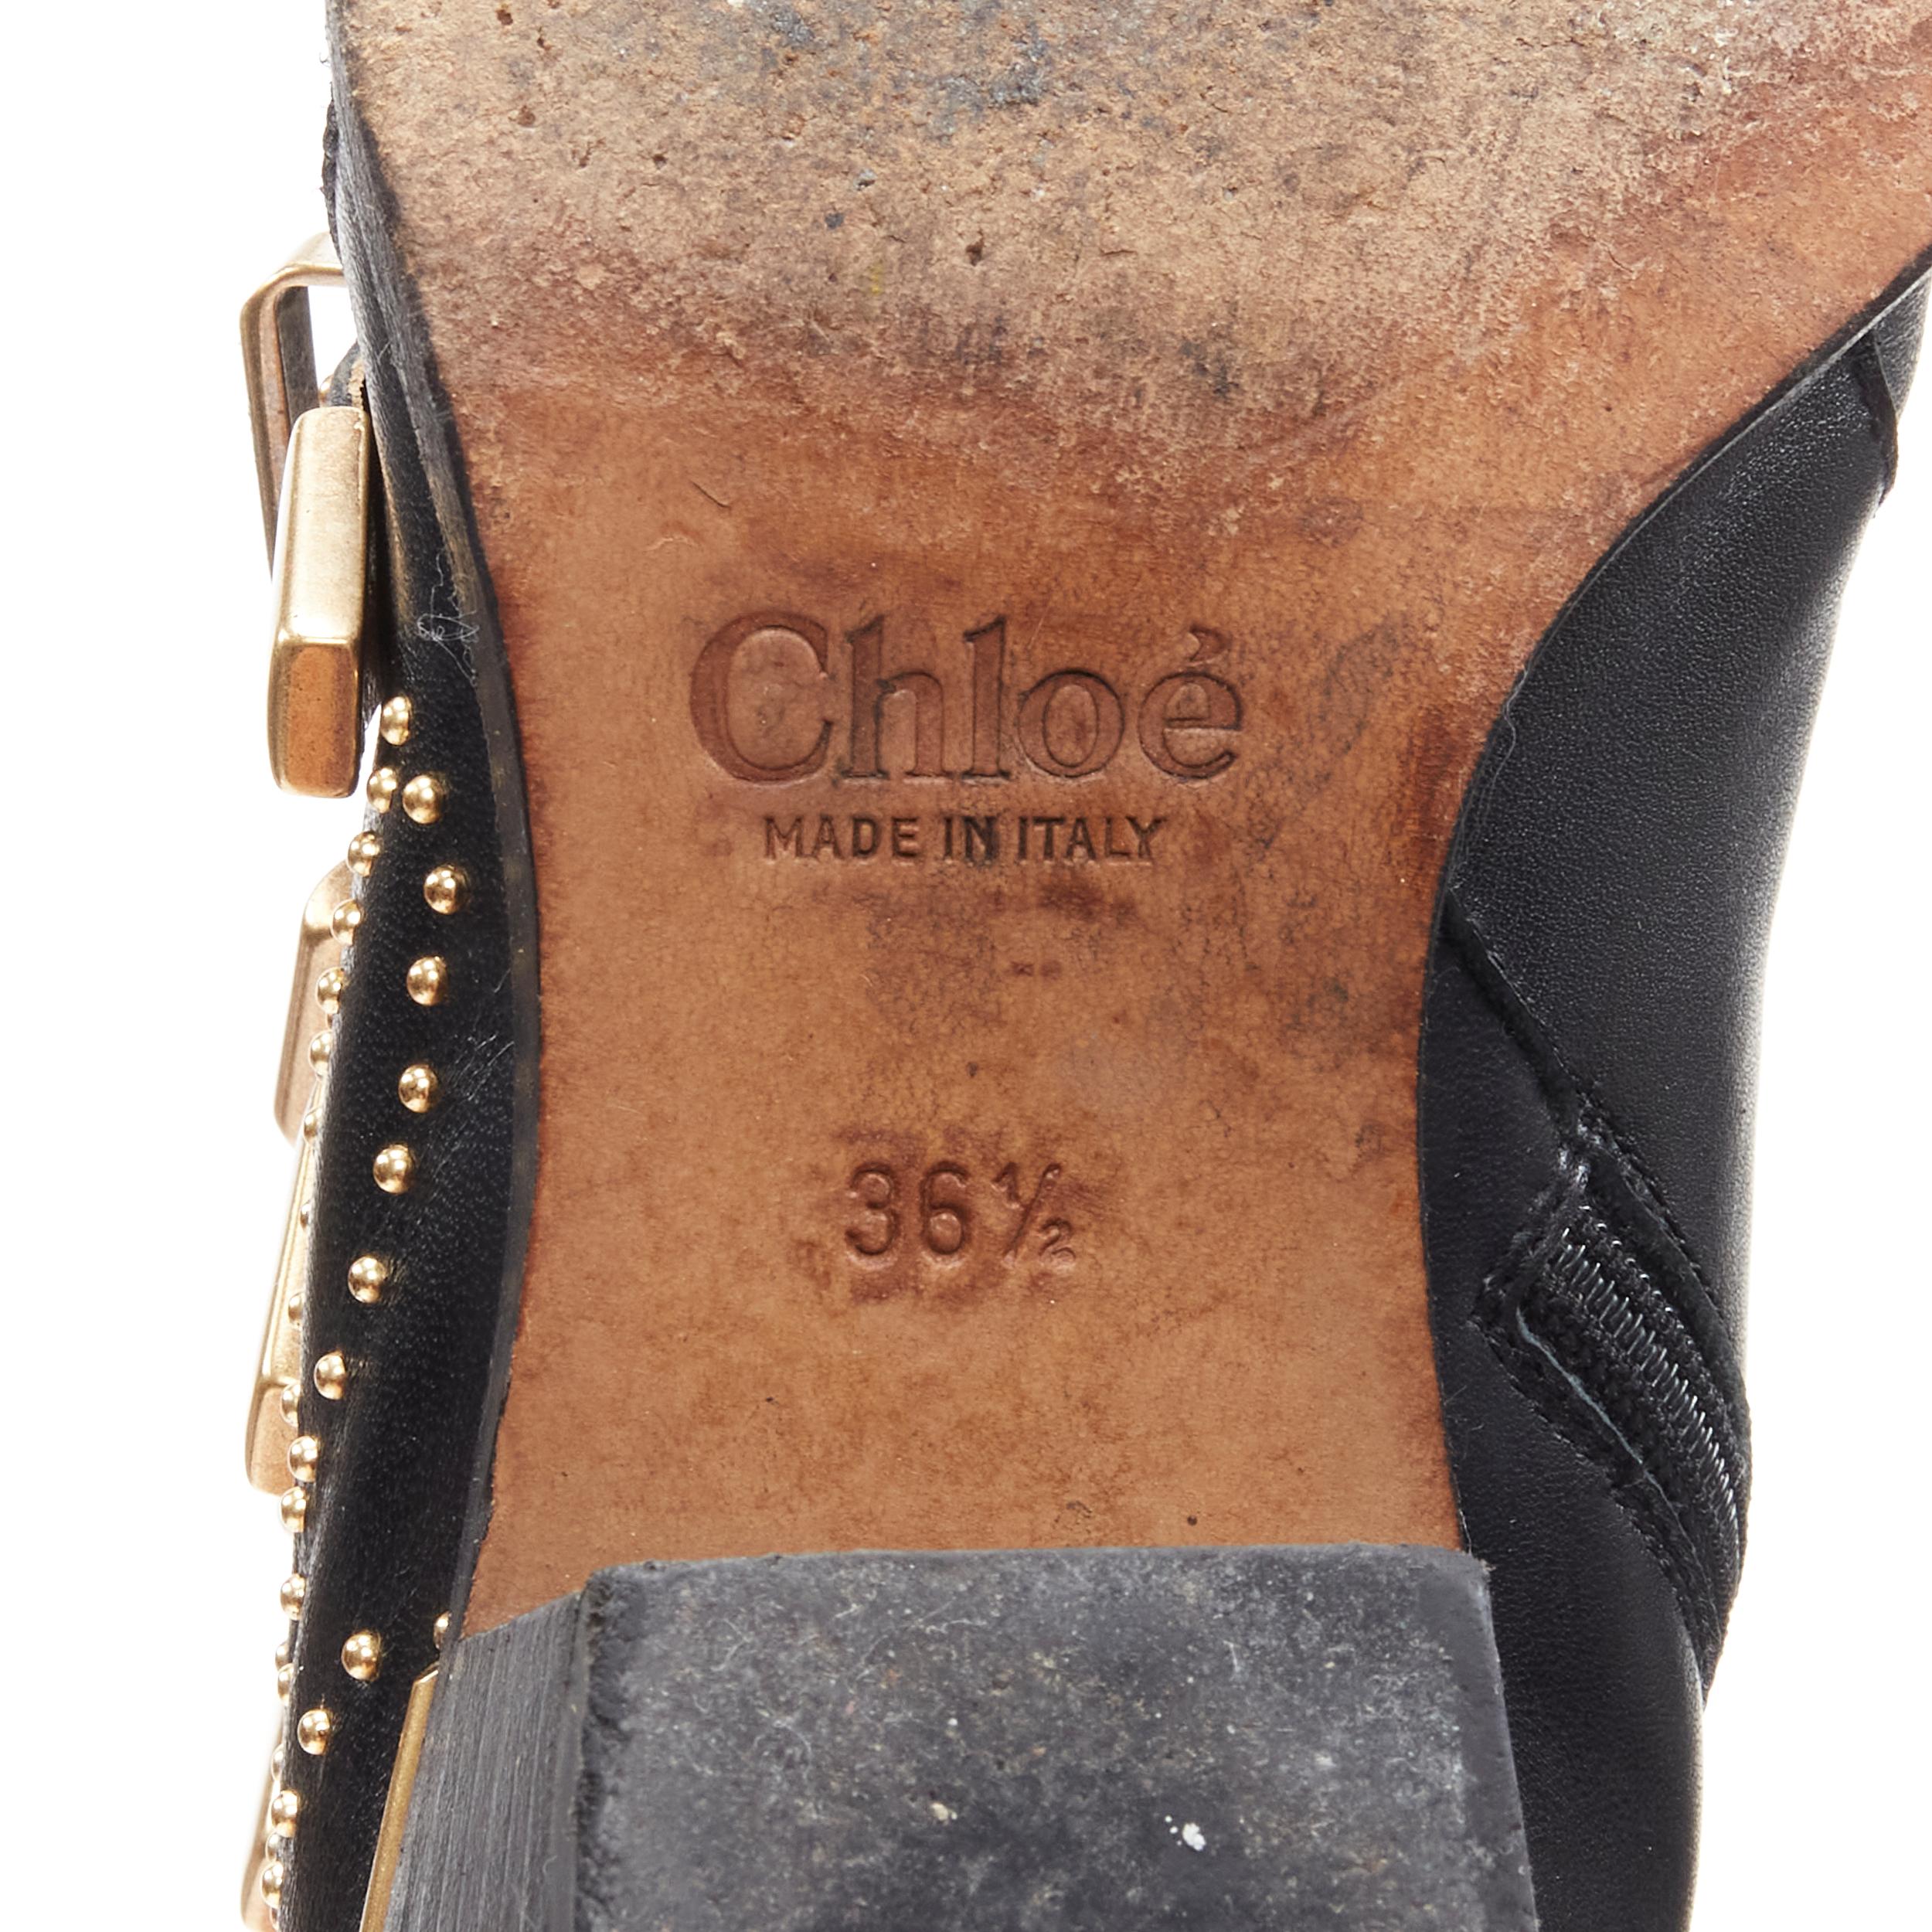 CHLOE Susanna black leather gold floral studded buckle ankle boot EU36.5 5